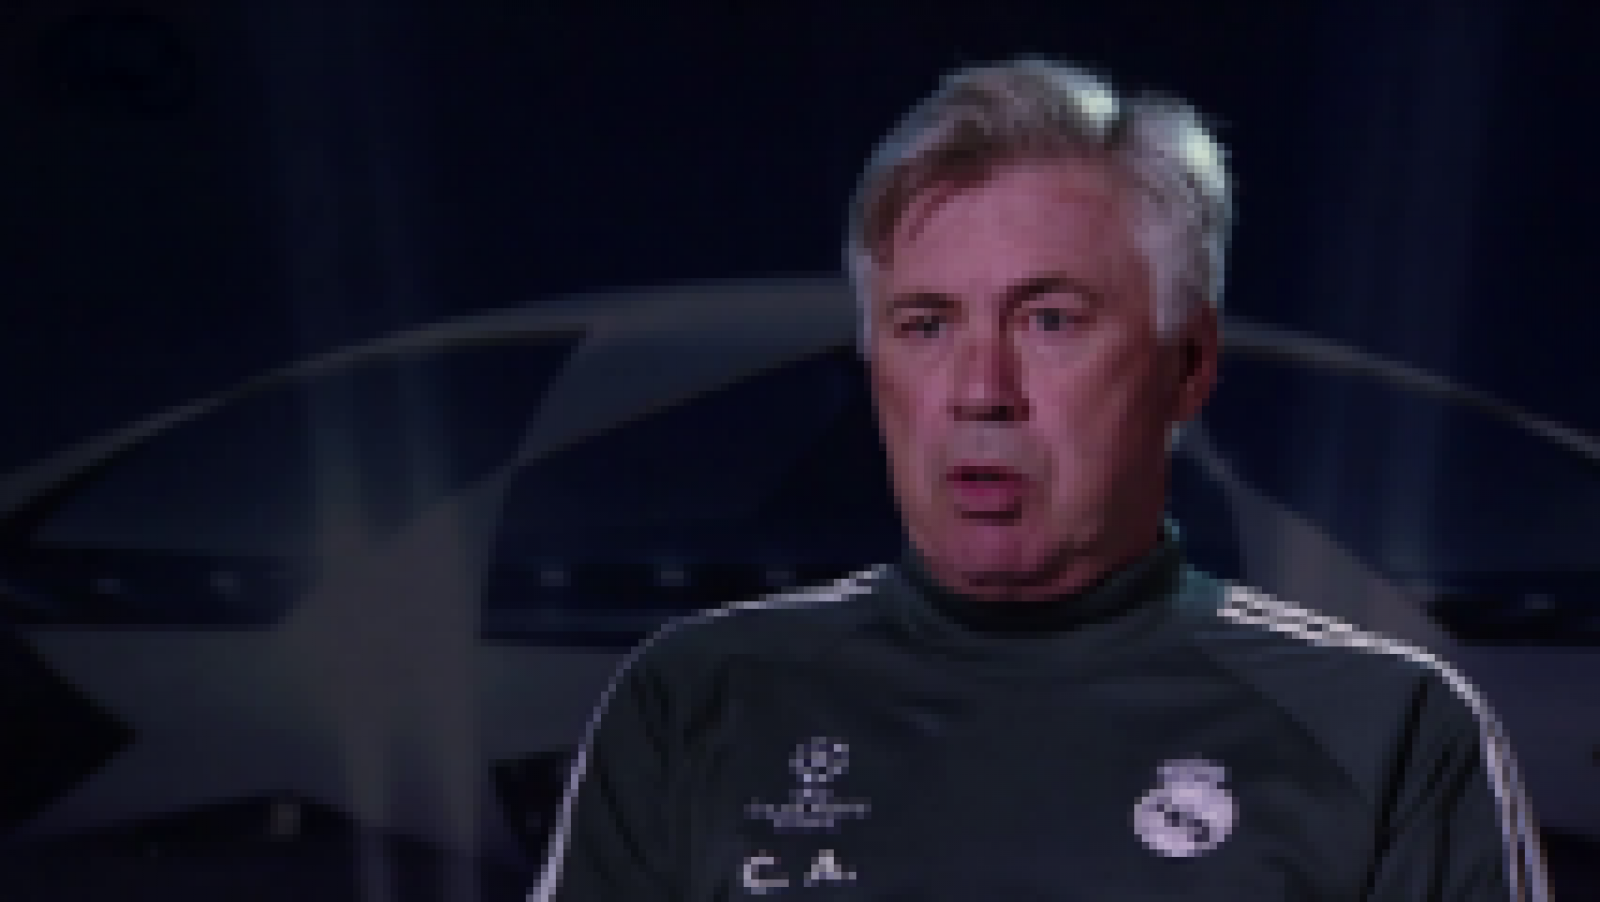  Real Madrid - Basilea: Carlo Ancelotti, entrevista completa 